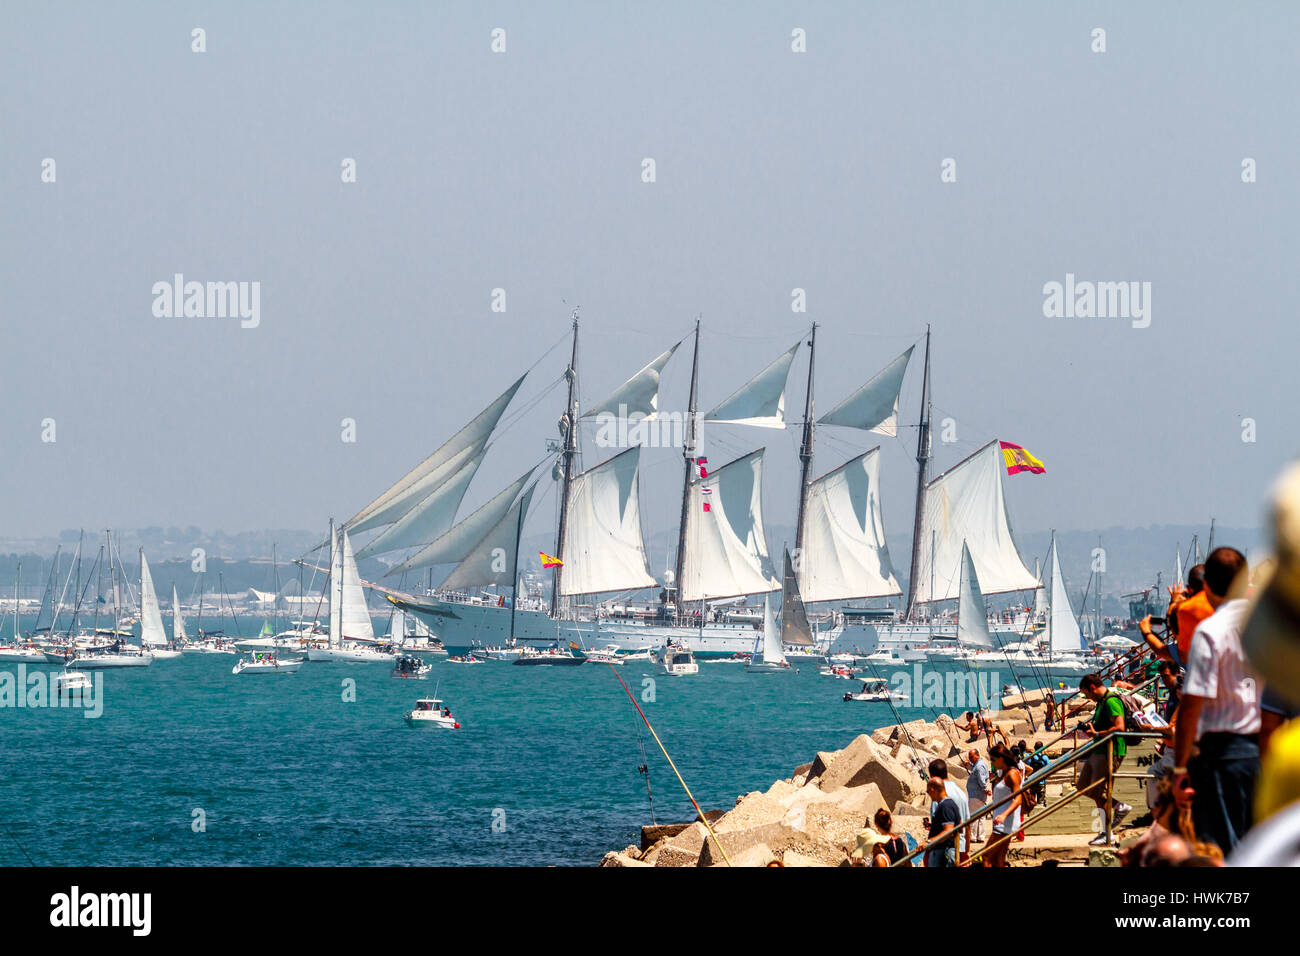 CADIZ, Spanien - 29 JUL: Spanische Marine Schiff, Rennen Juan Sebastian de Elcano setzen Segel auf dem Großsegler 2012 am 29. Juli 2012, in Cadiz, Spanien Stockfoto